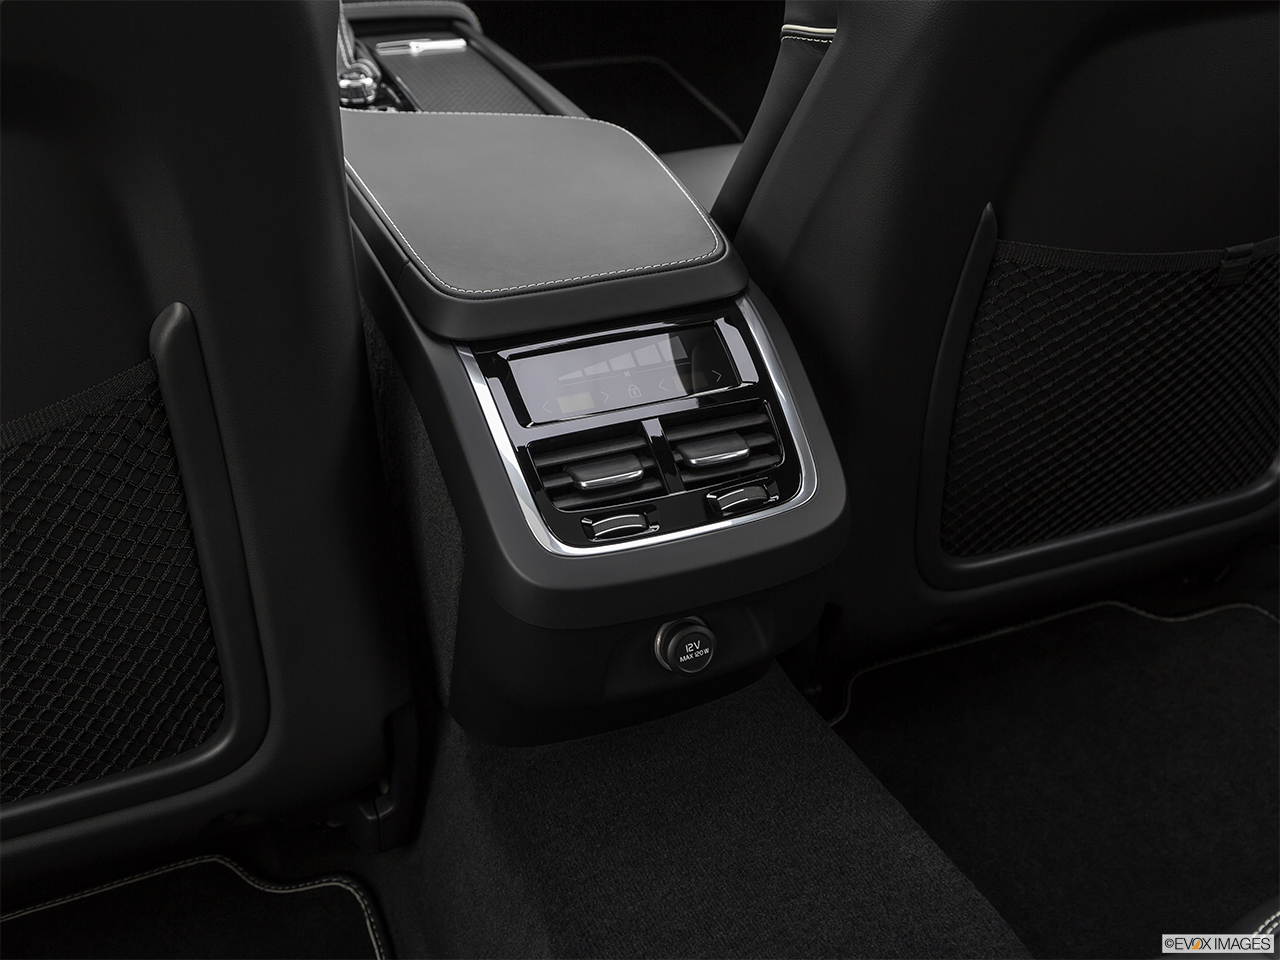 2019 Volvo V90 T5 R-Design Rear A/C controls. 